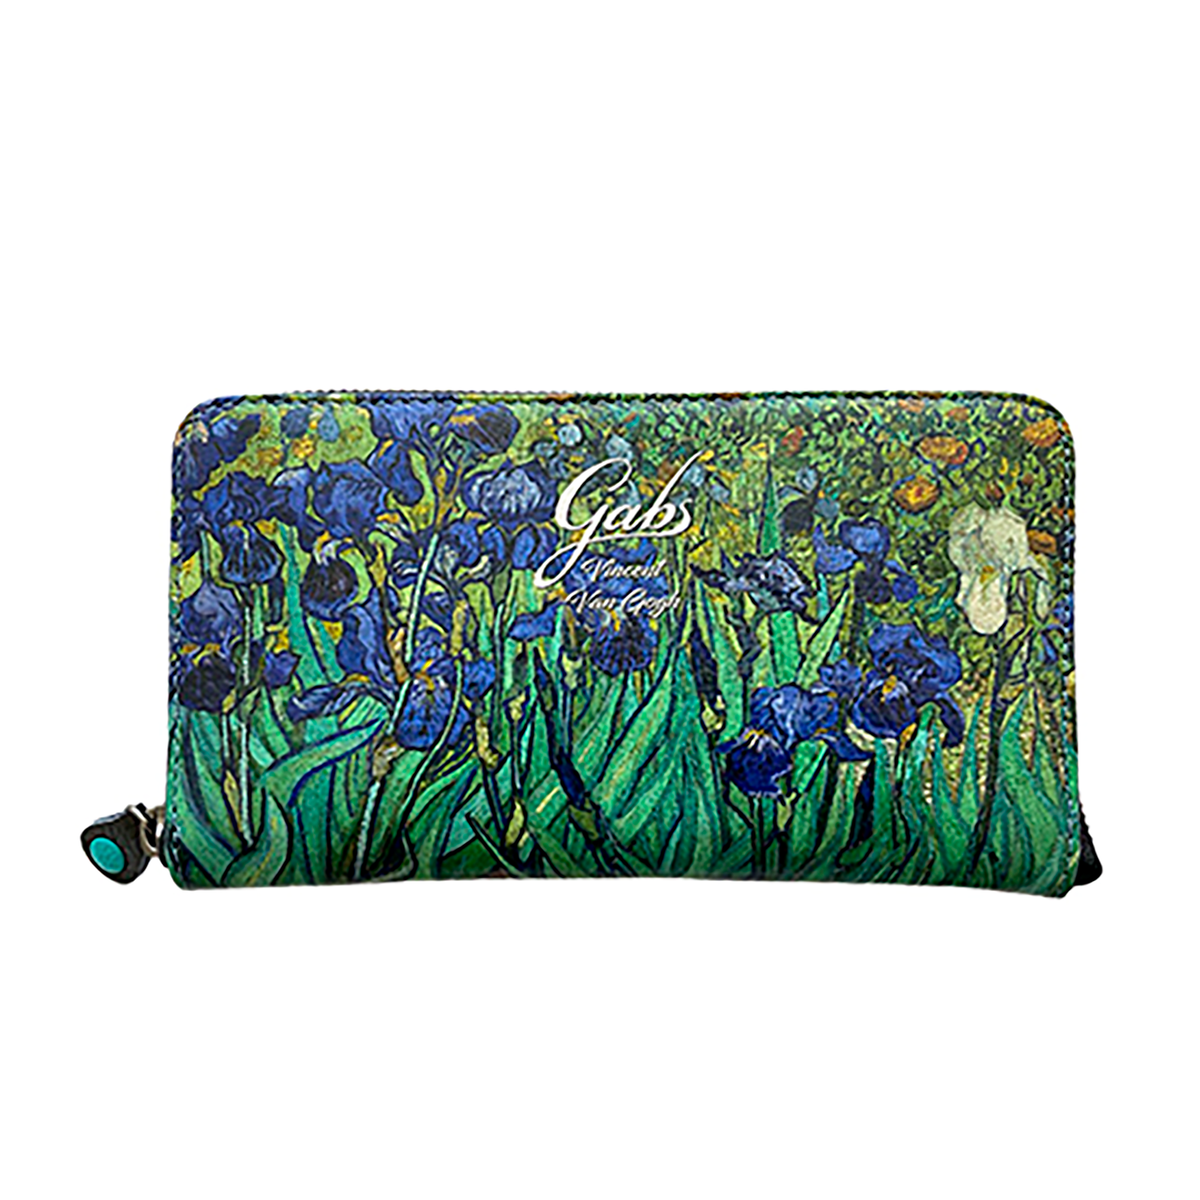 Wallet featuring Van Gogh&#39;s - Irises by Gabs Italy